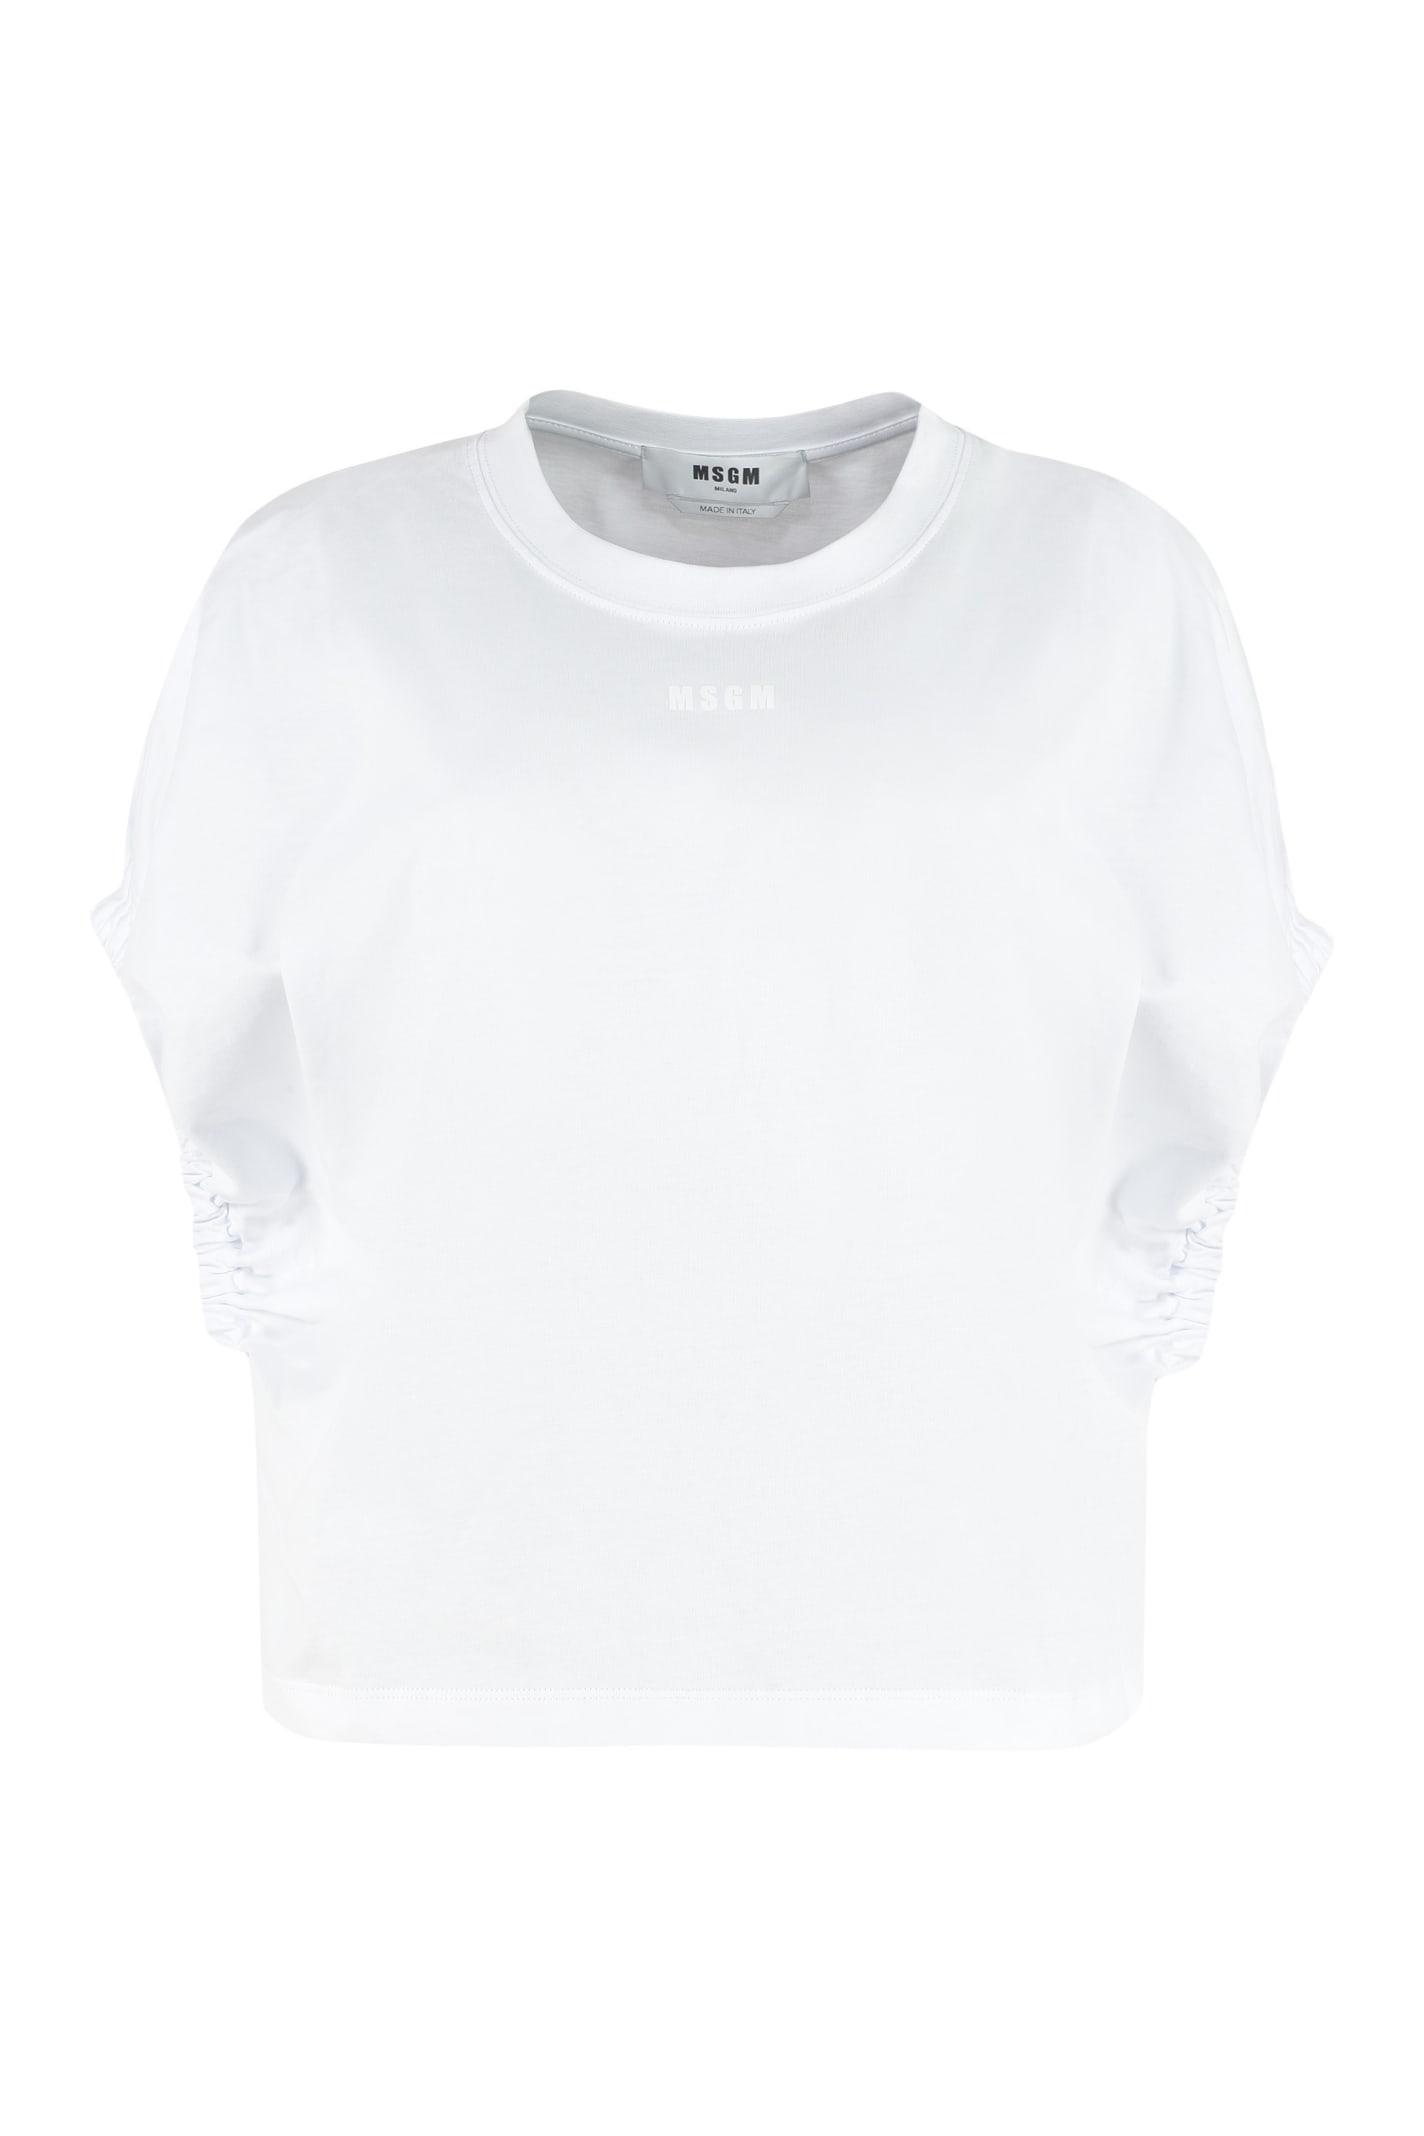 MSGM Cotton Crew-neck T-shirt